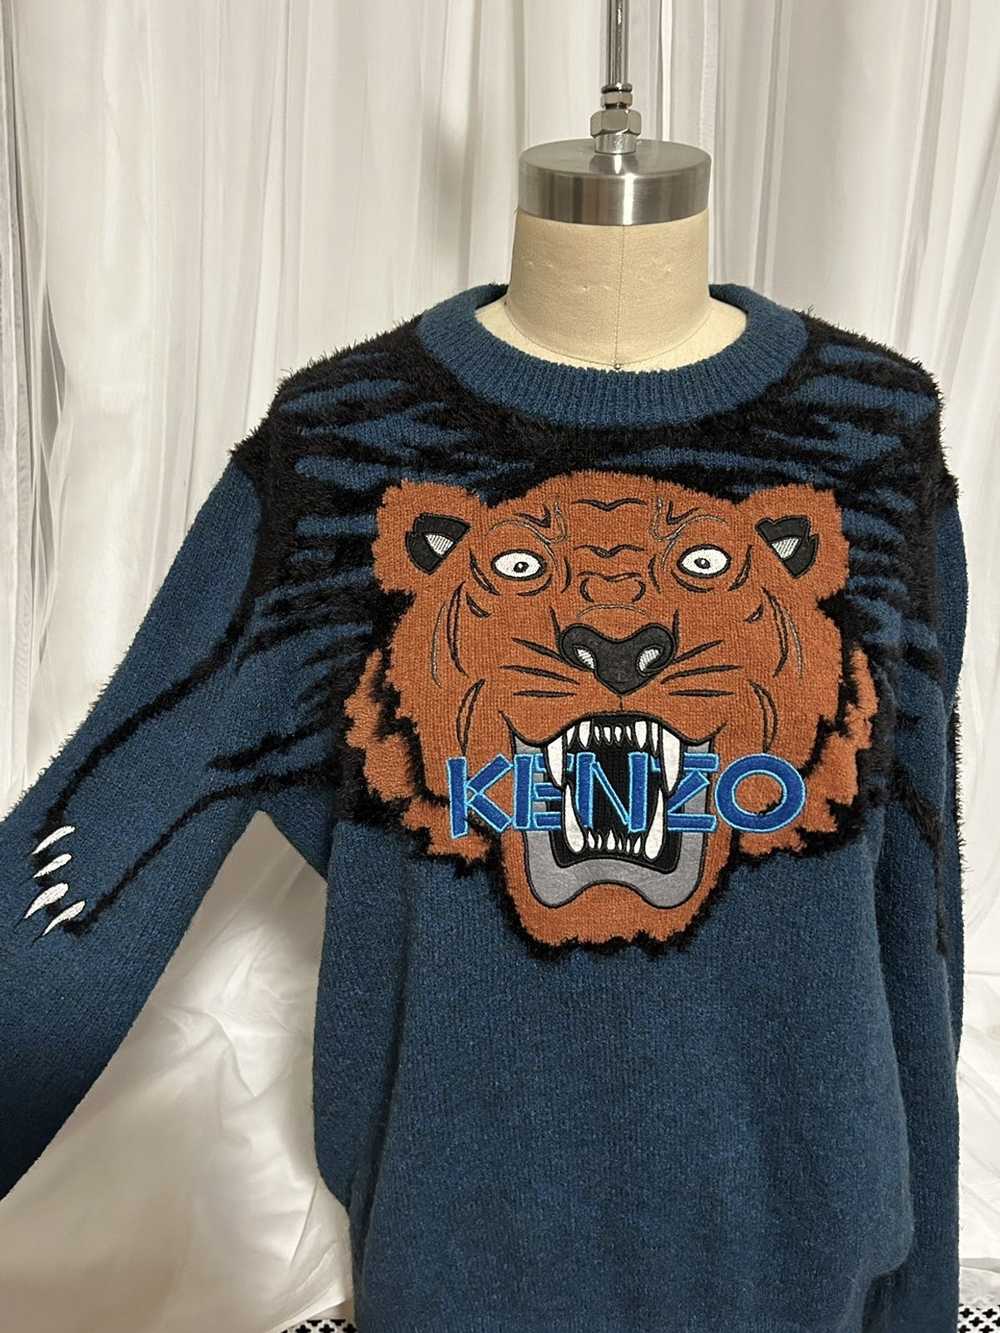 Kenzo Kenzo Tiger Sweater in Dark Teal - image 2